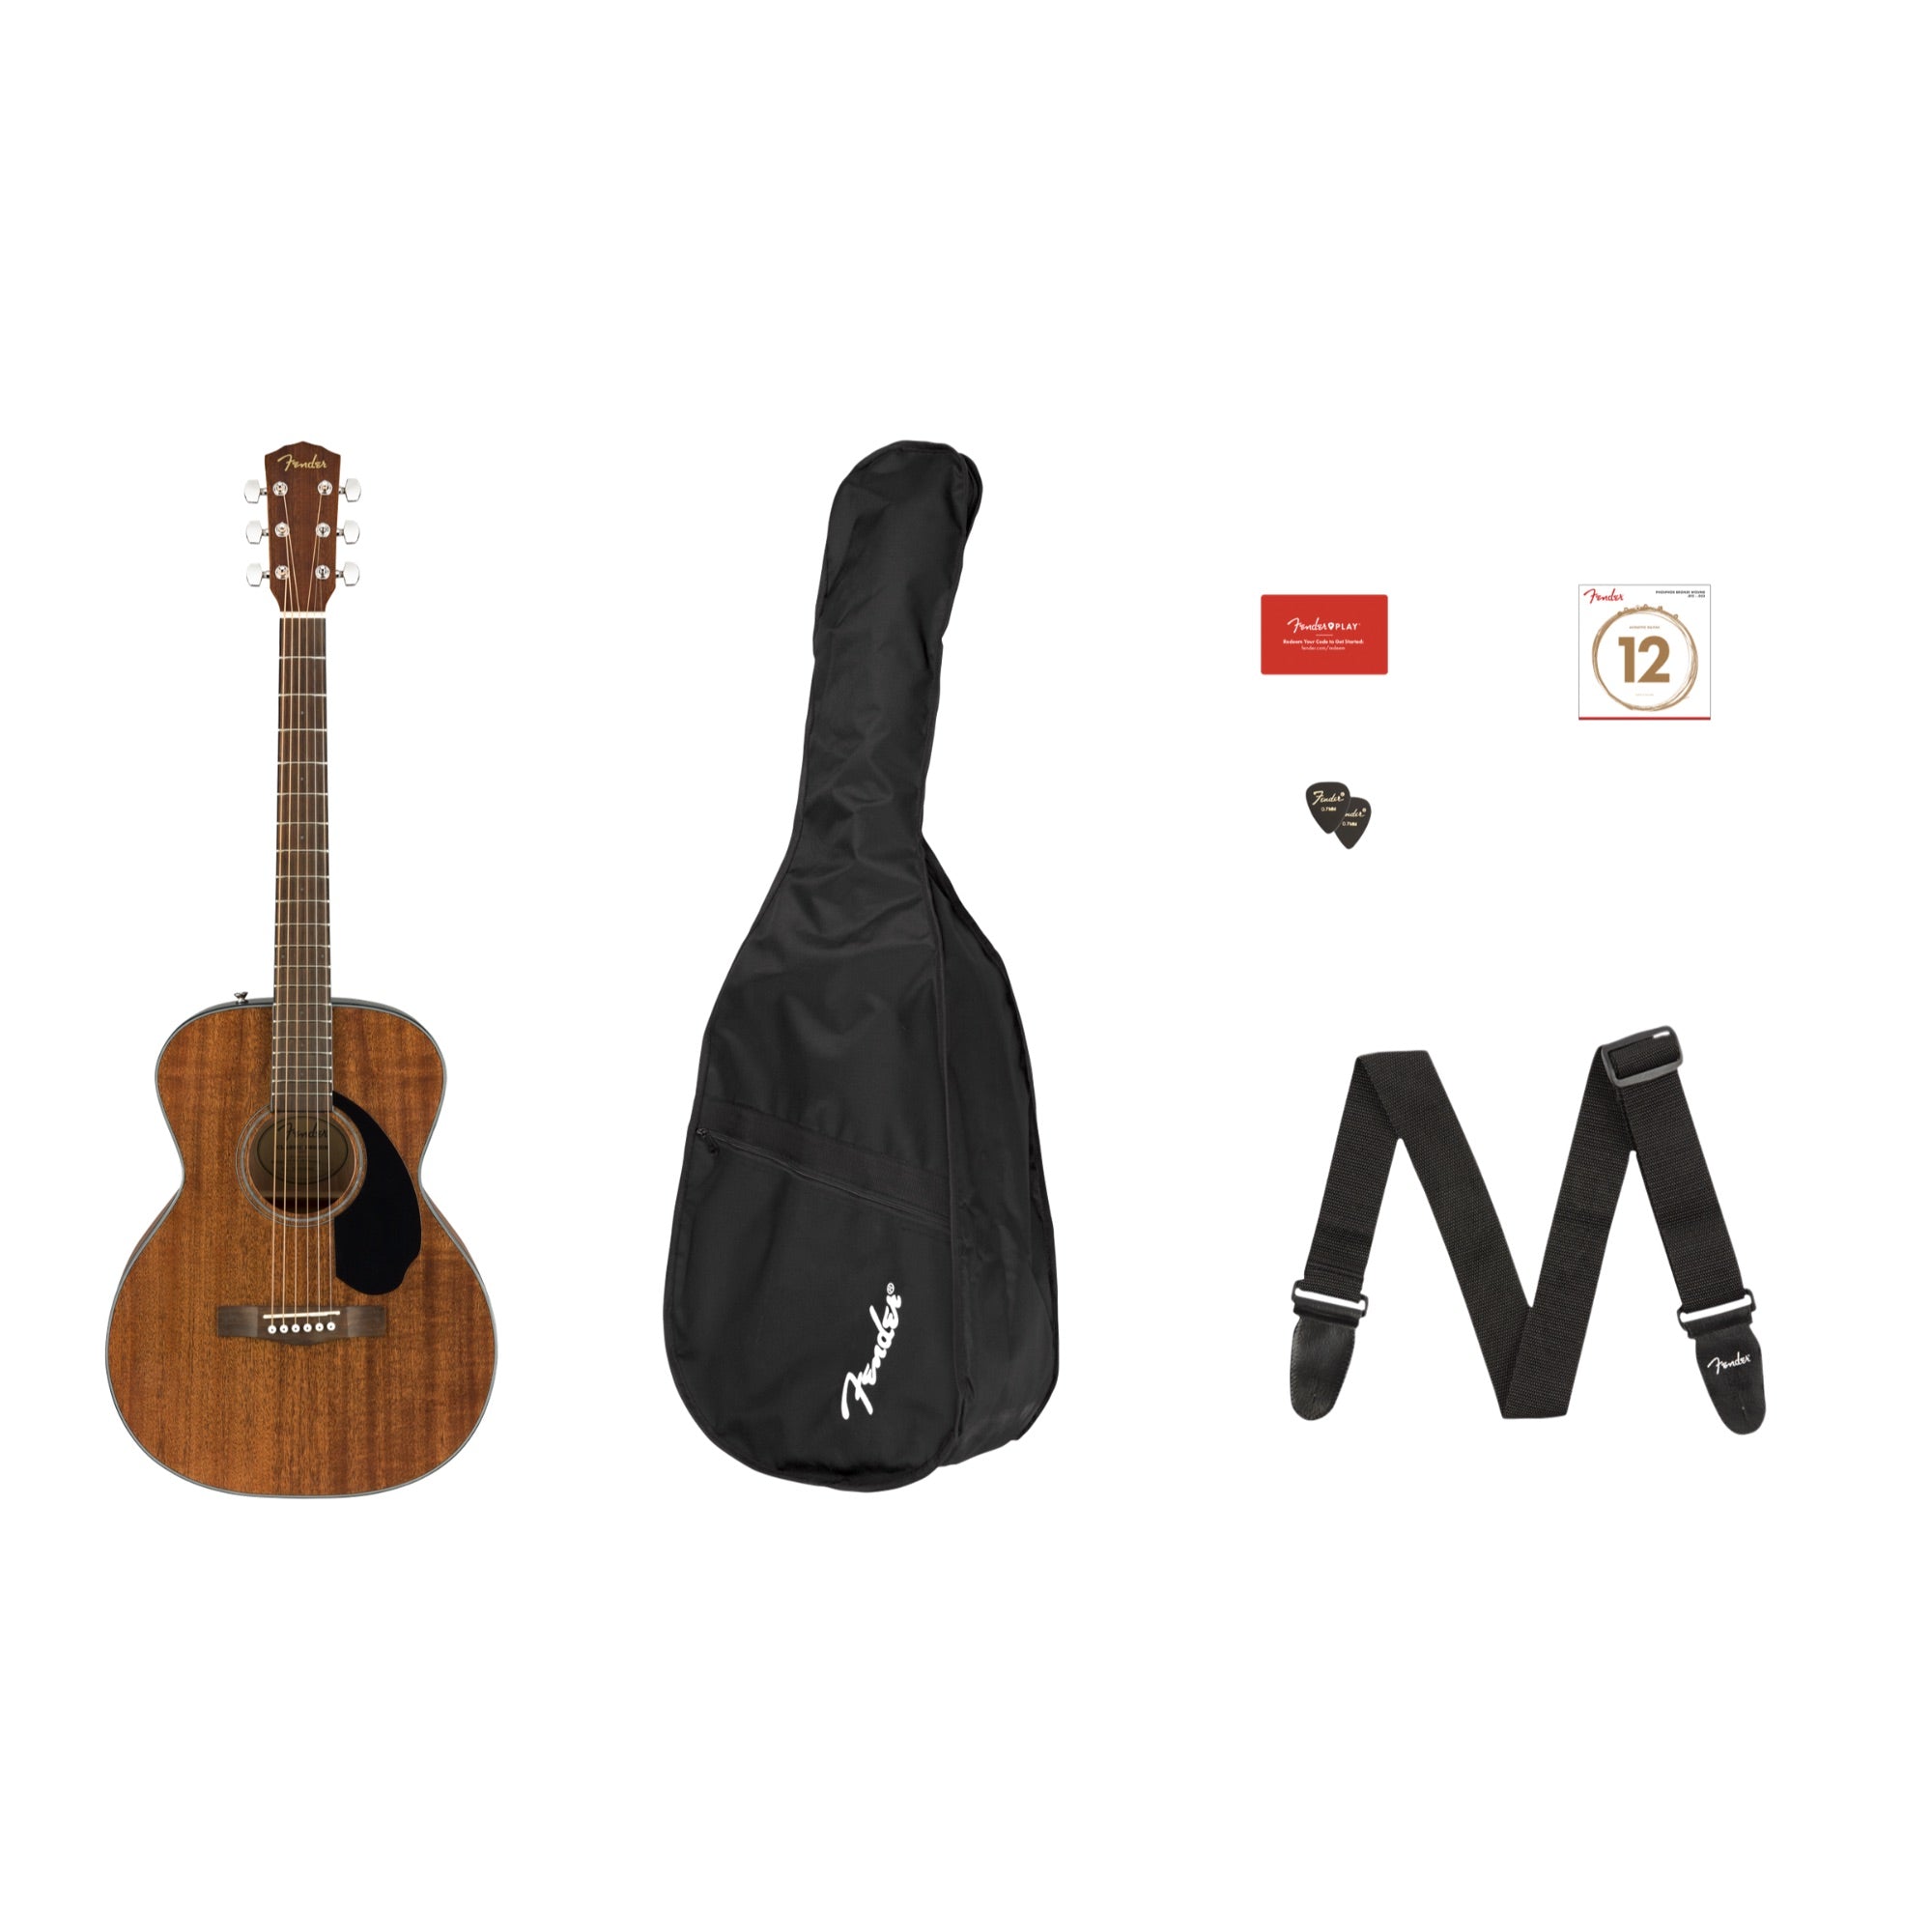 Fender CC-60S Acoustic Guitar Pack V2, All-Mahogany